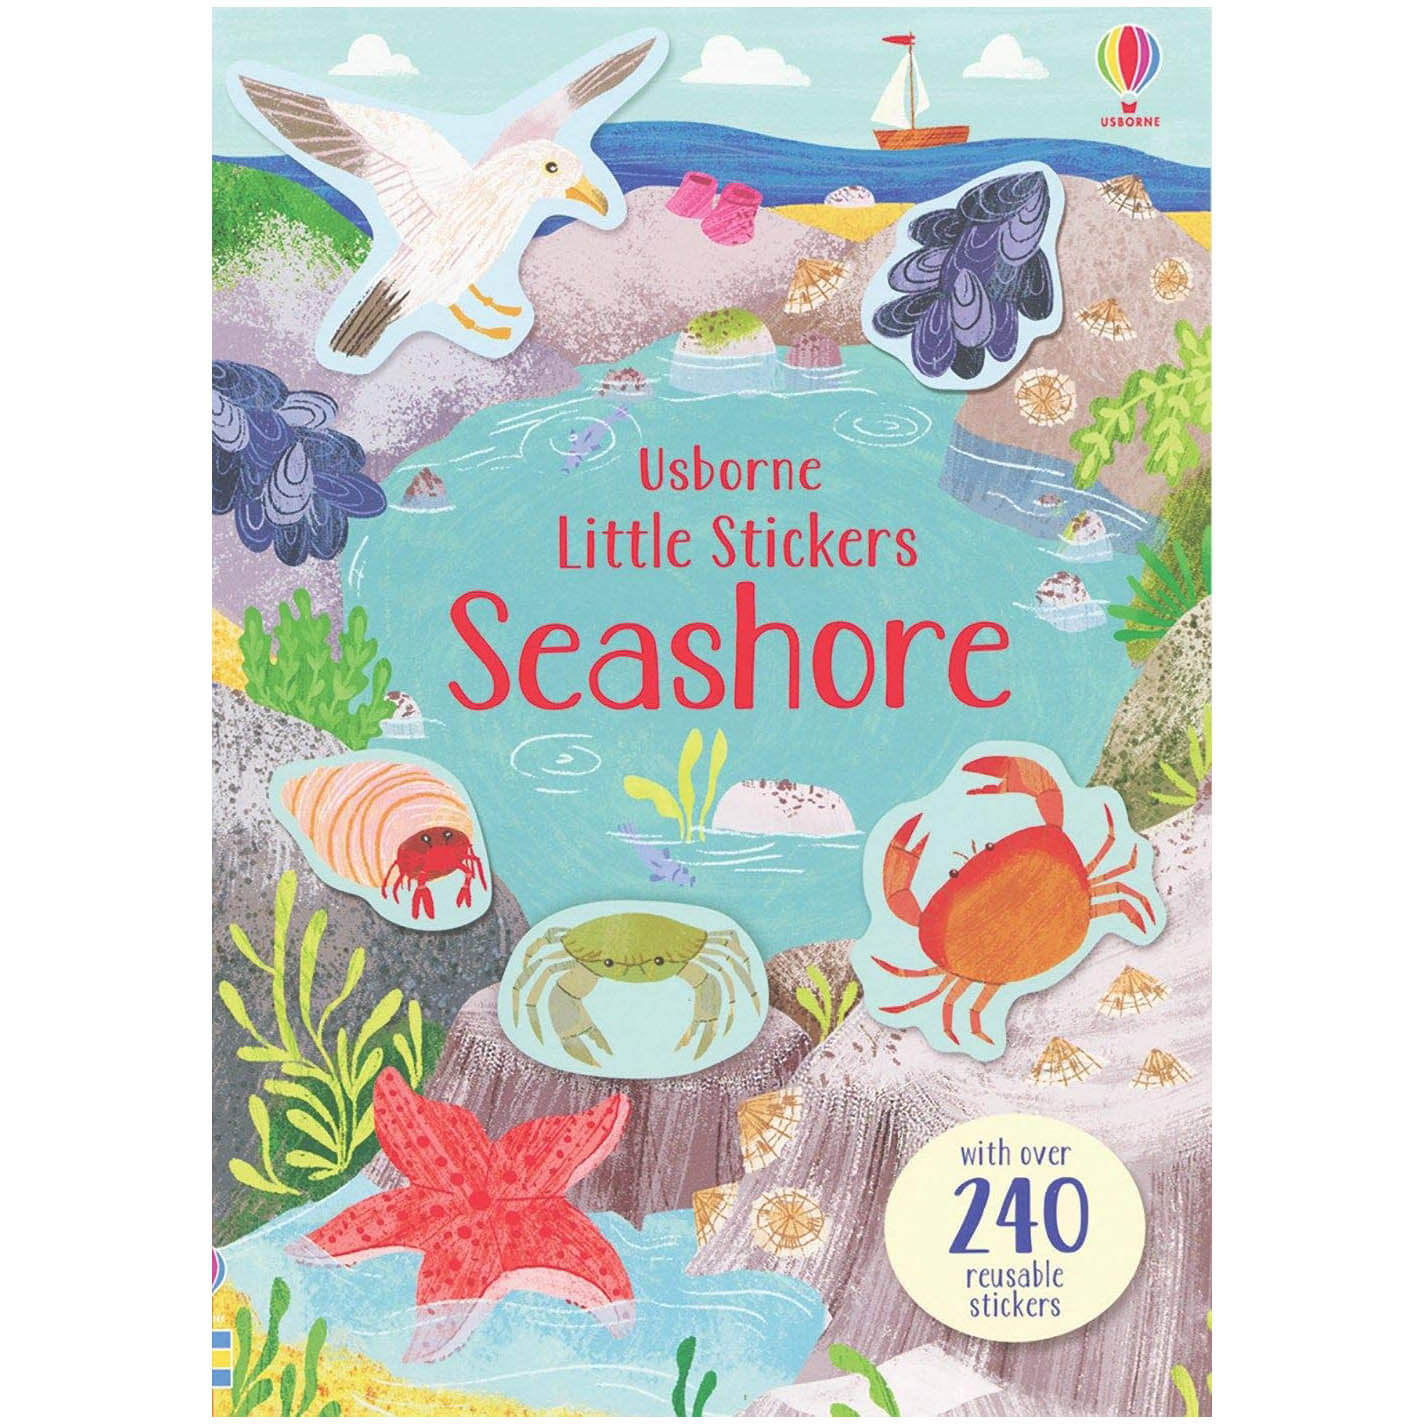 Usborne Little Stickers Seashore (Little Stickers Books)